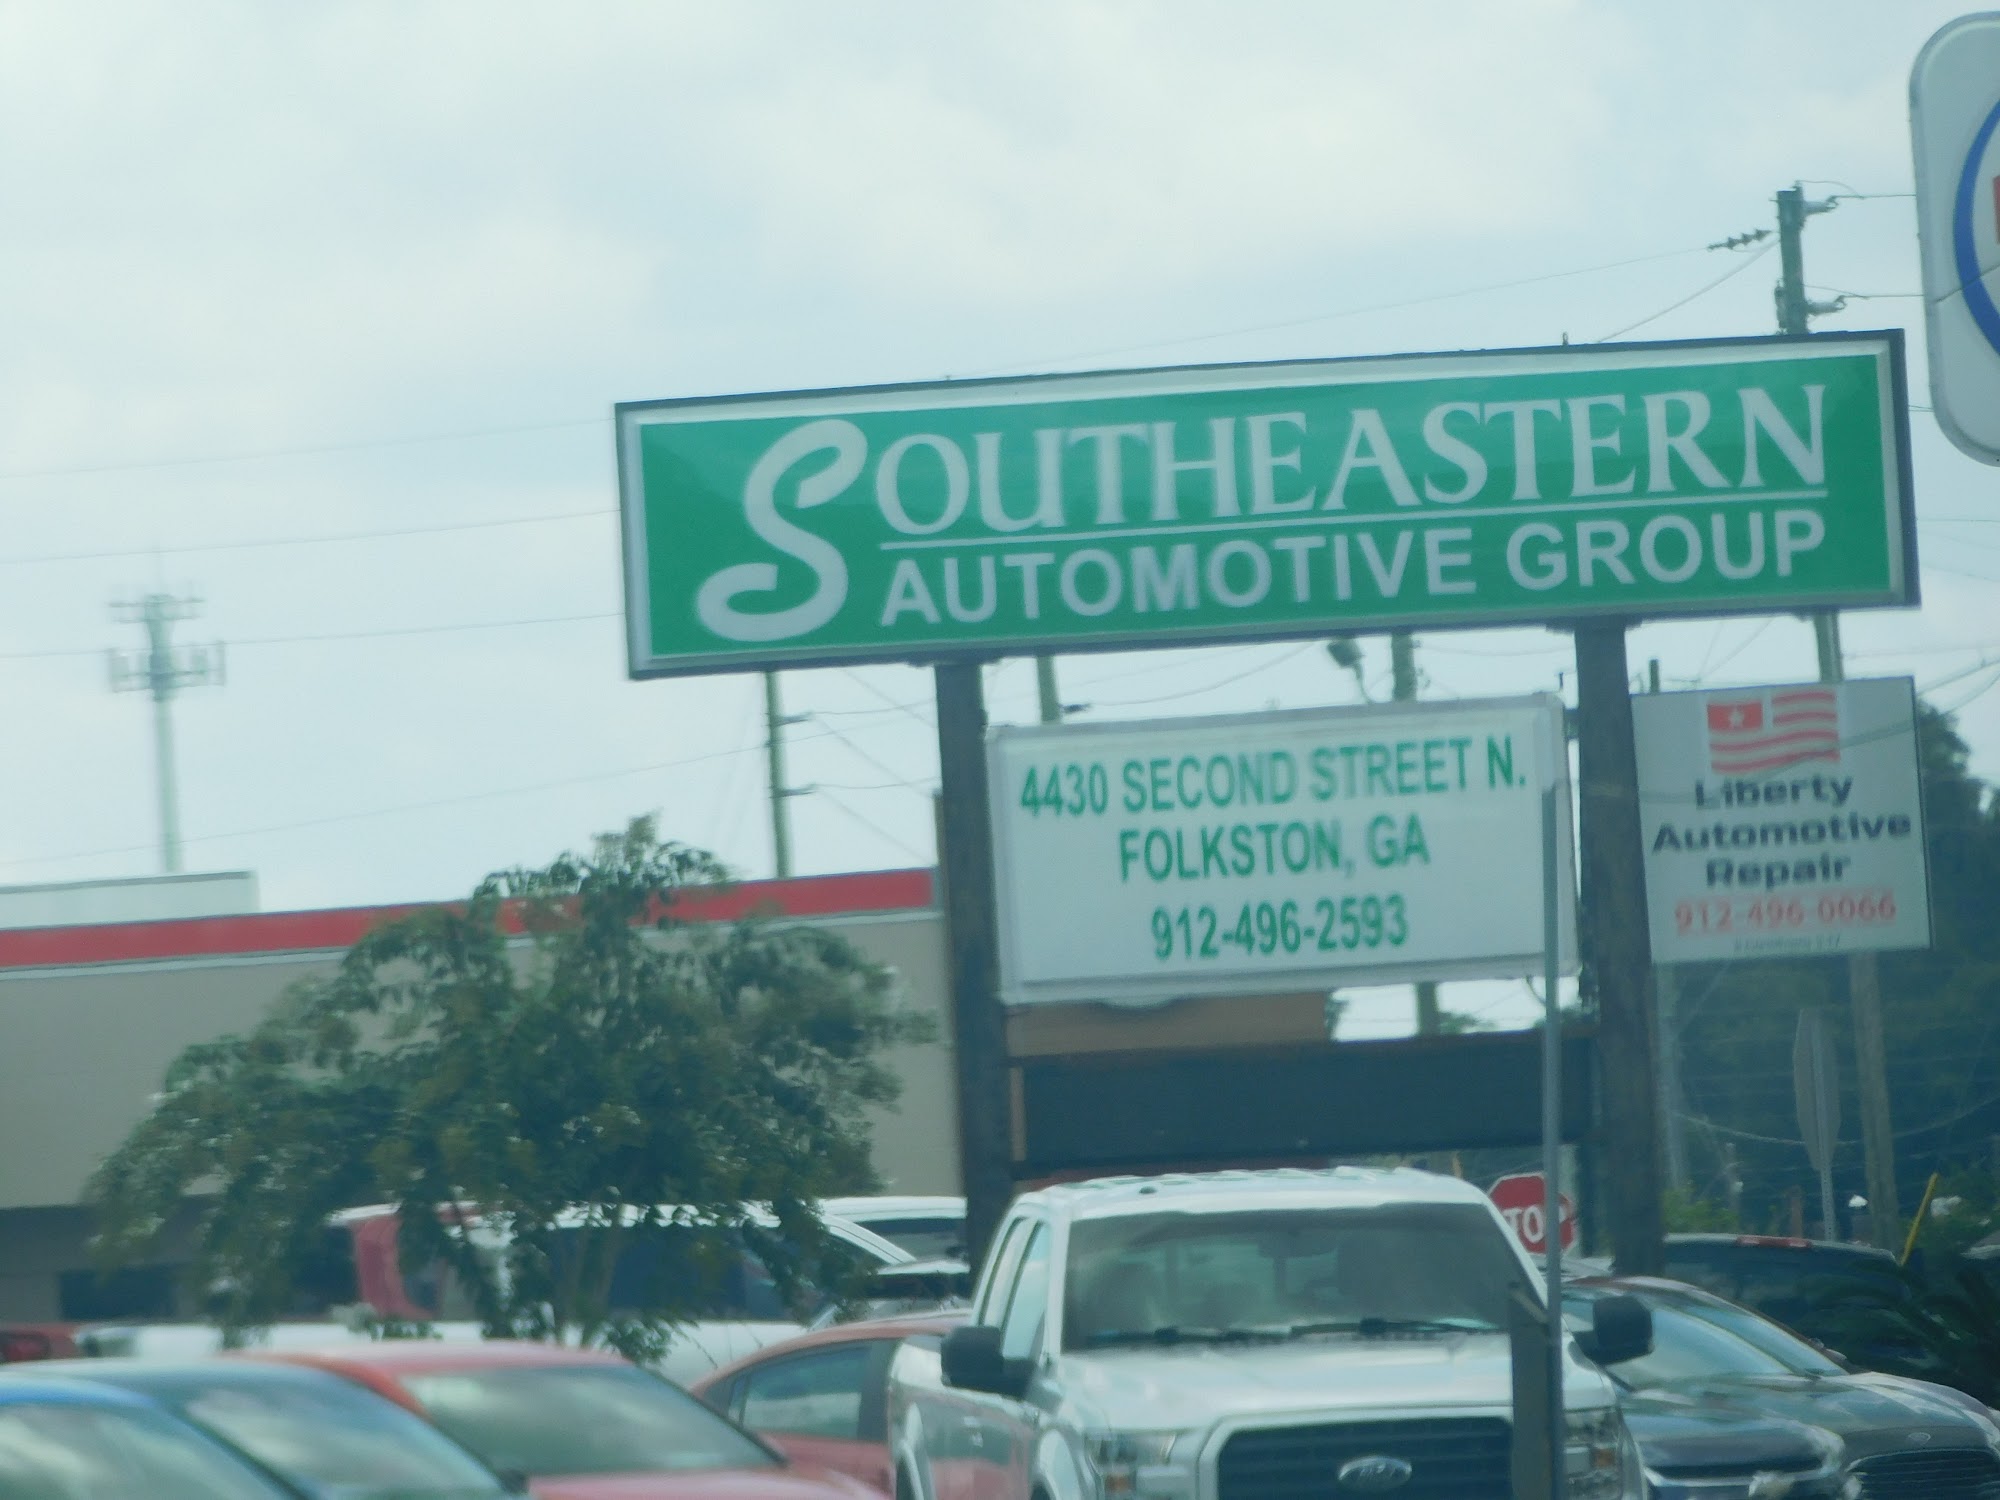 Southeastern Automotive Group